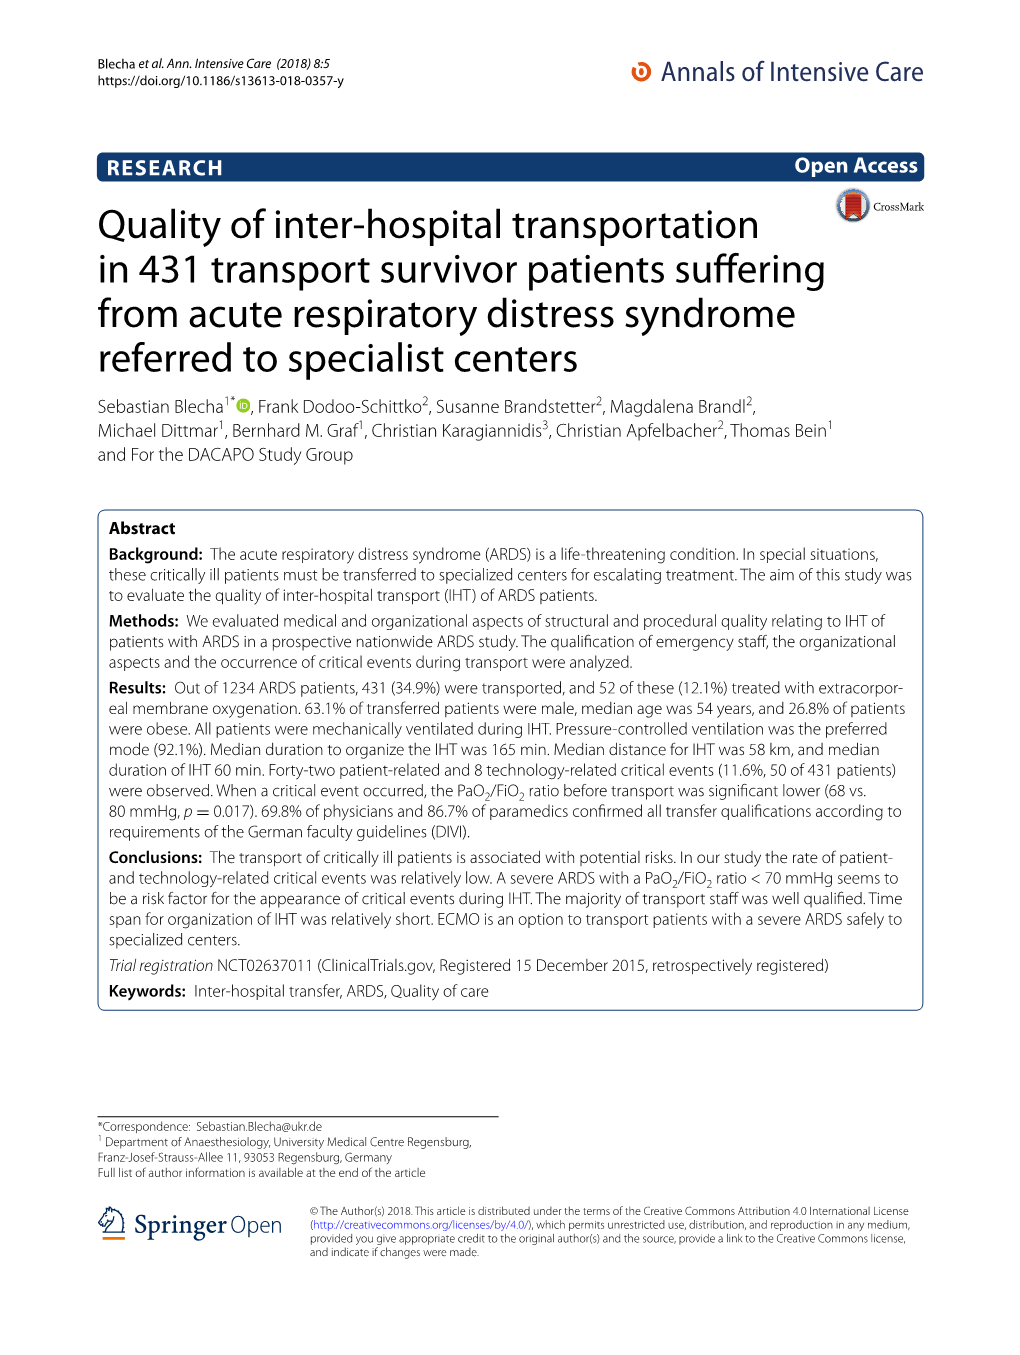 Quality of Inter-Hospital Transportation in 431 Transport Survivor Patients